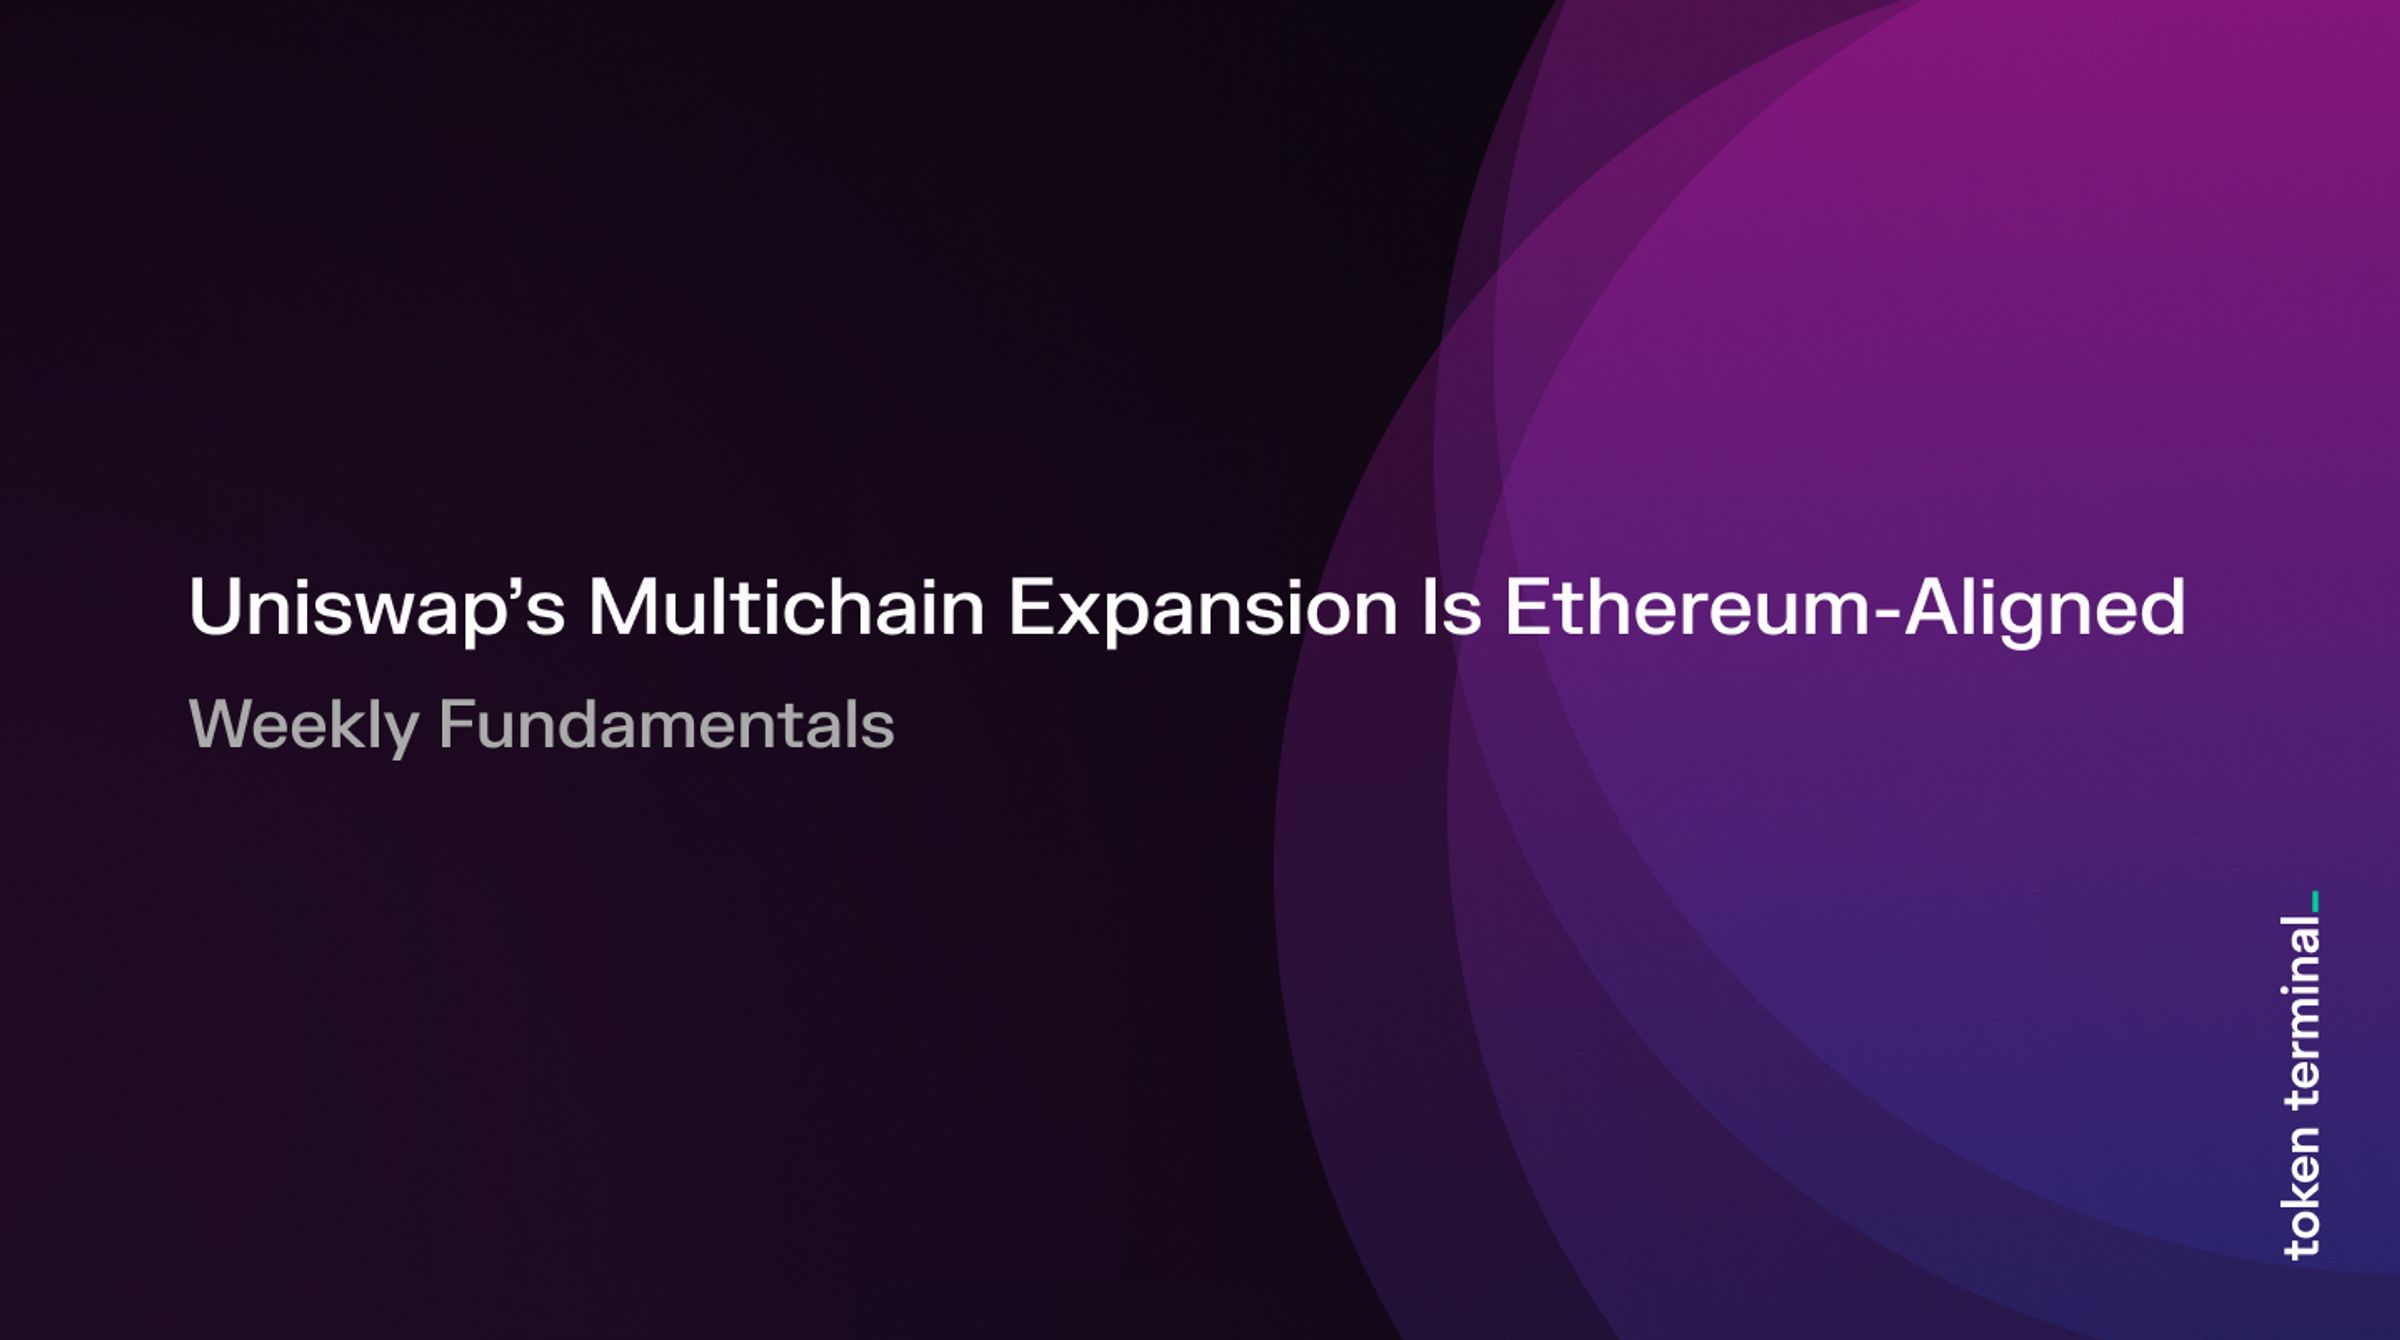 Uniswap’s Multichain Expansion Is Ethereum-Aligned